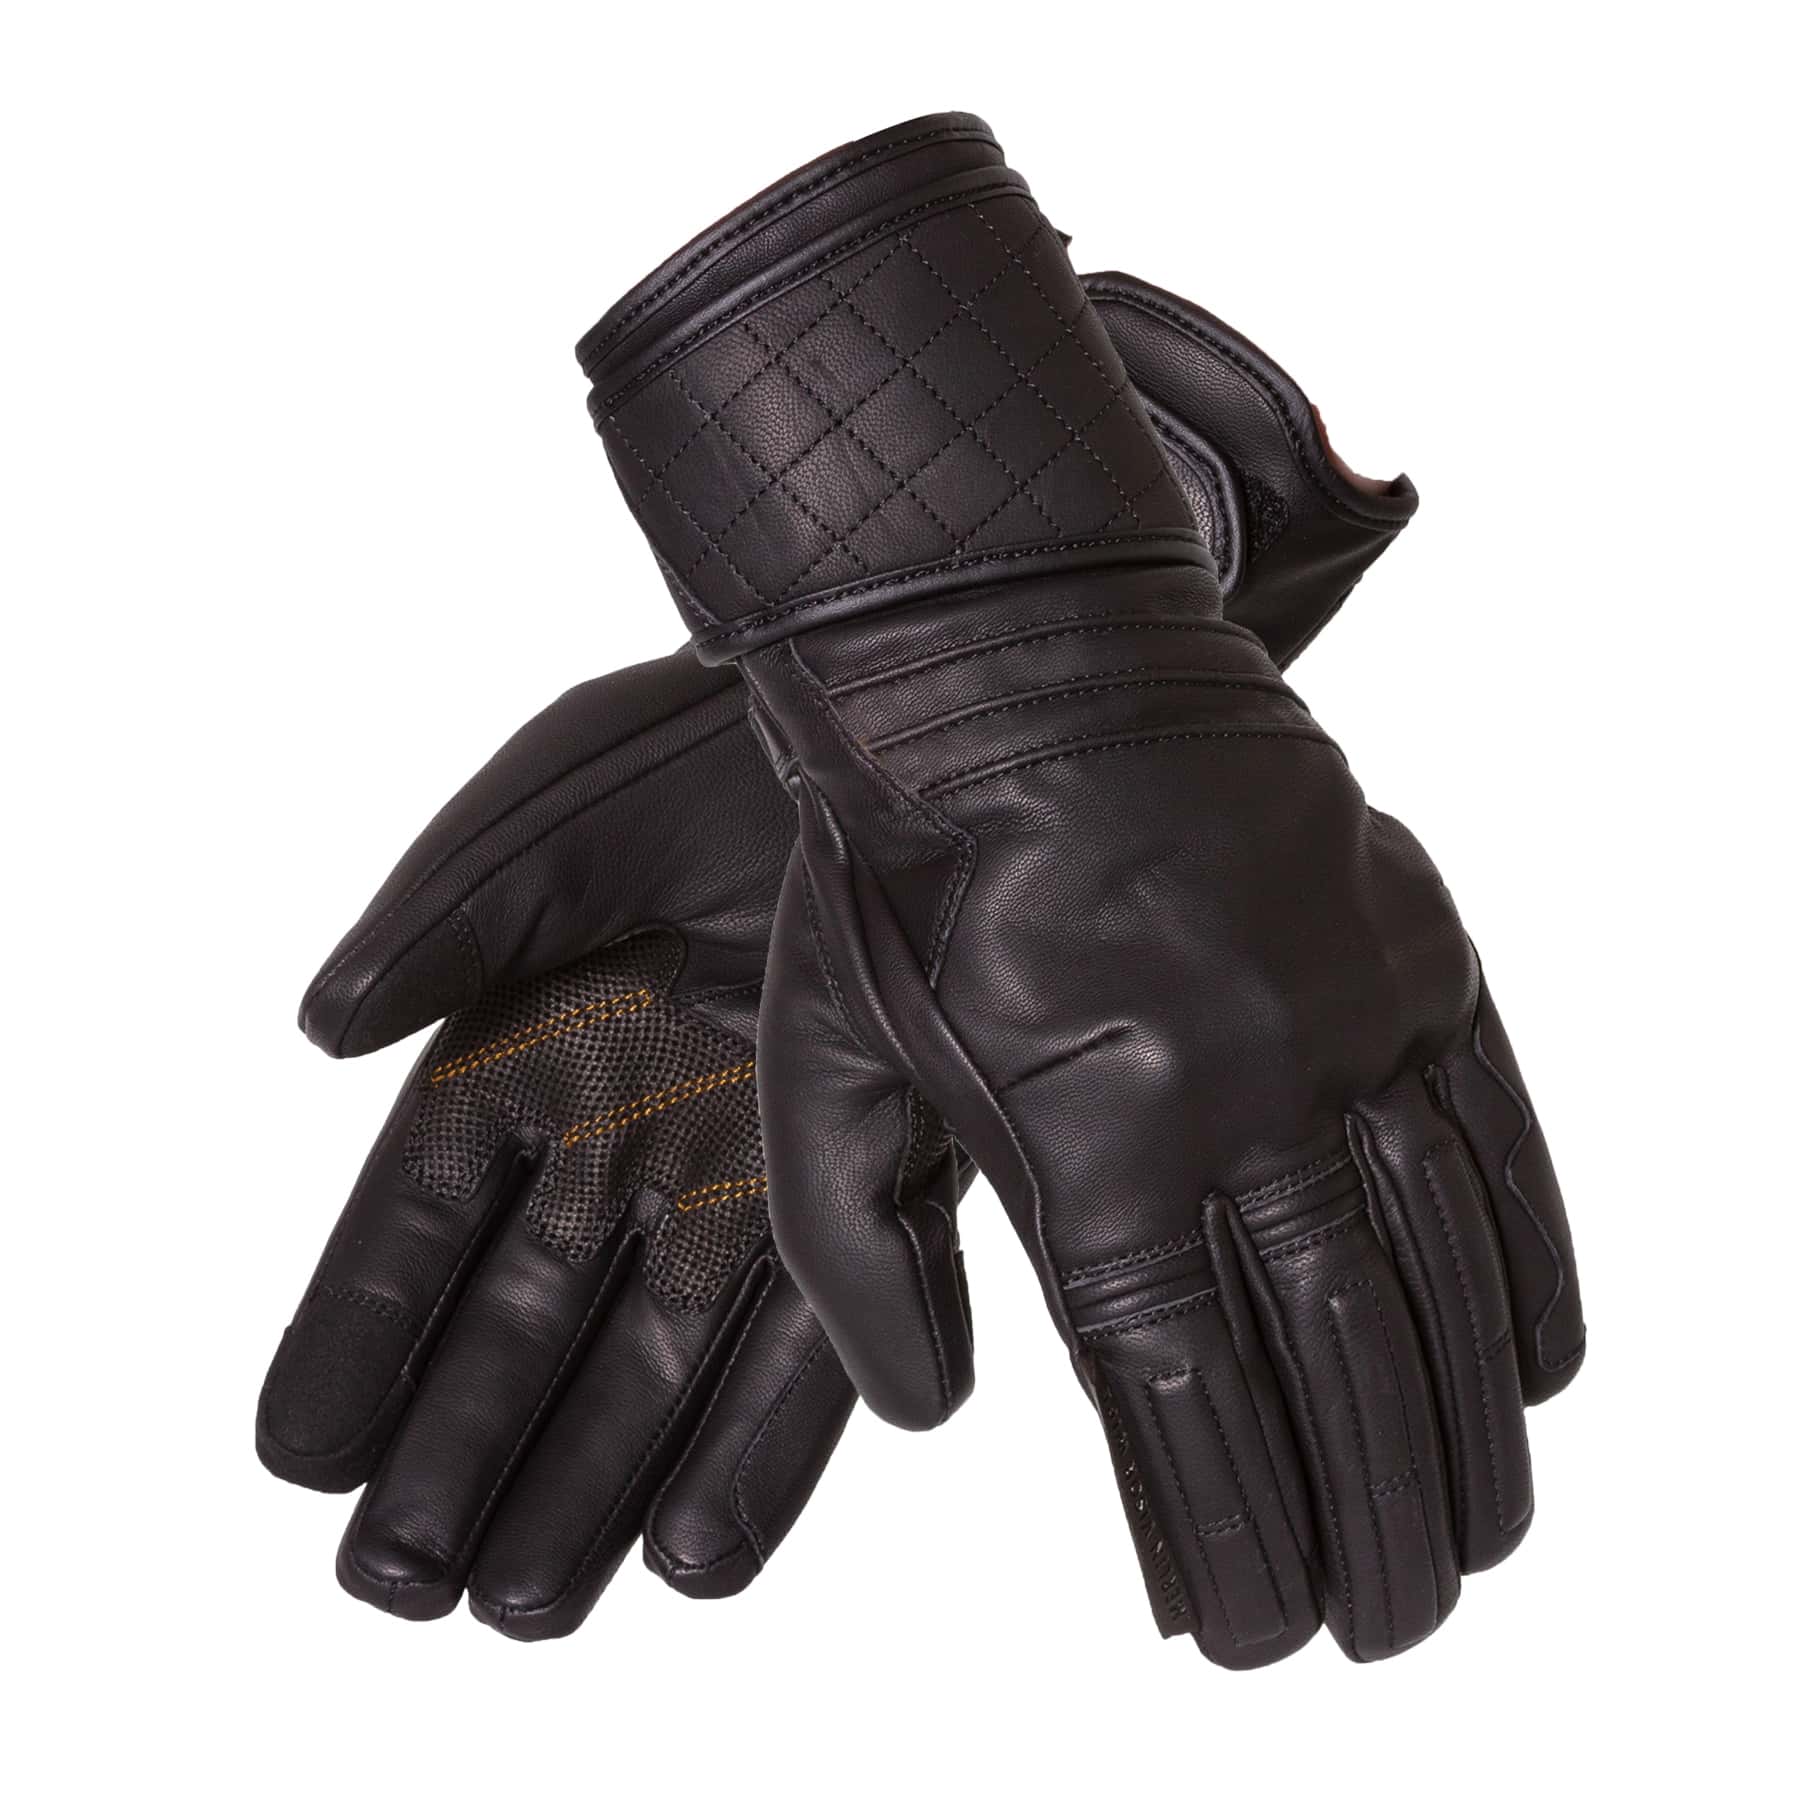 Catton III D3O® WP Glove - Merlin